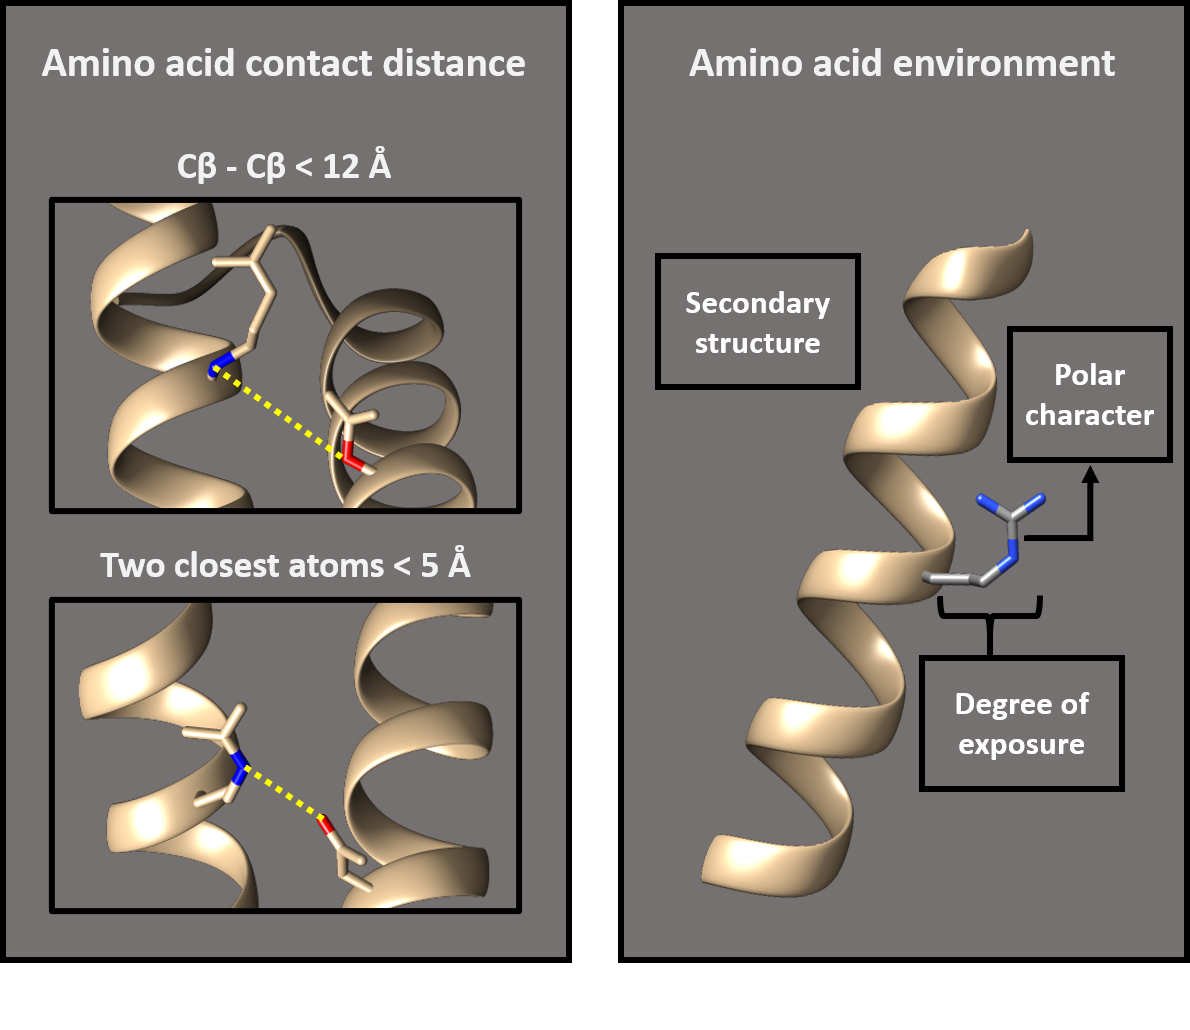 Amino acid contact distance